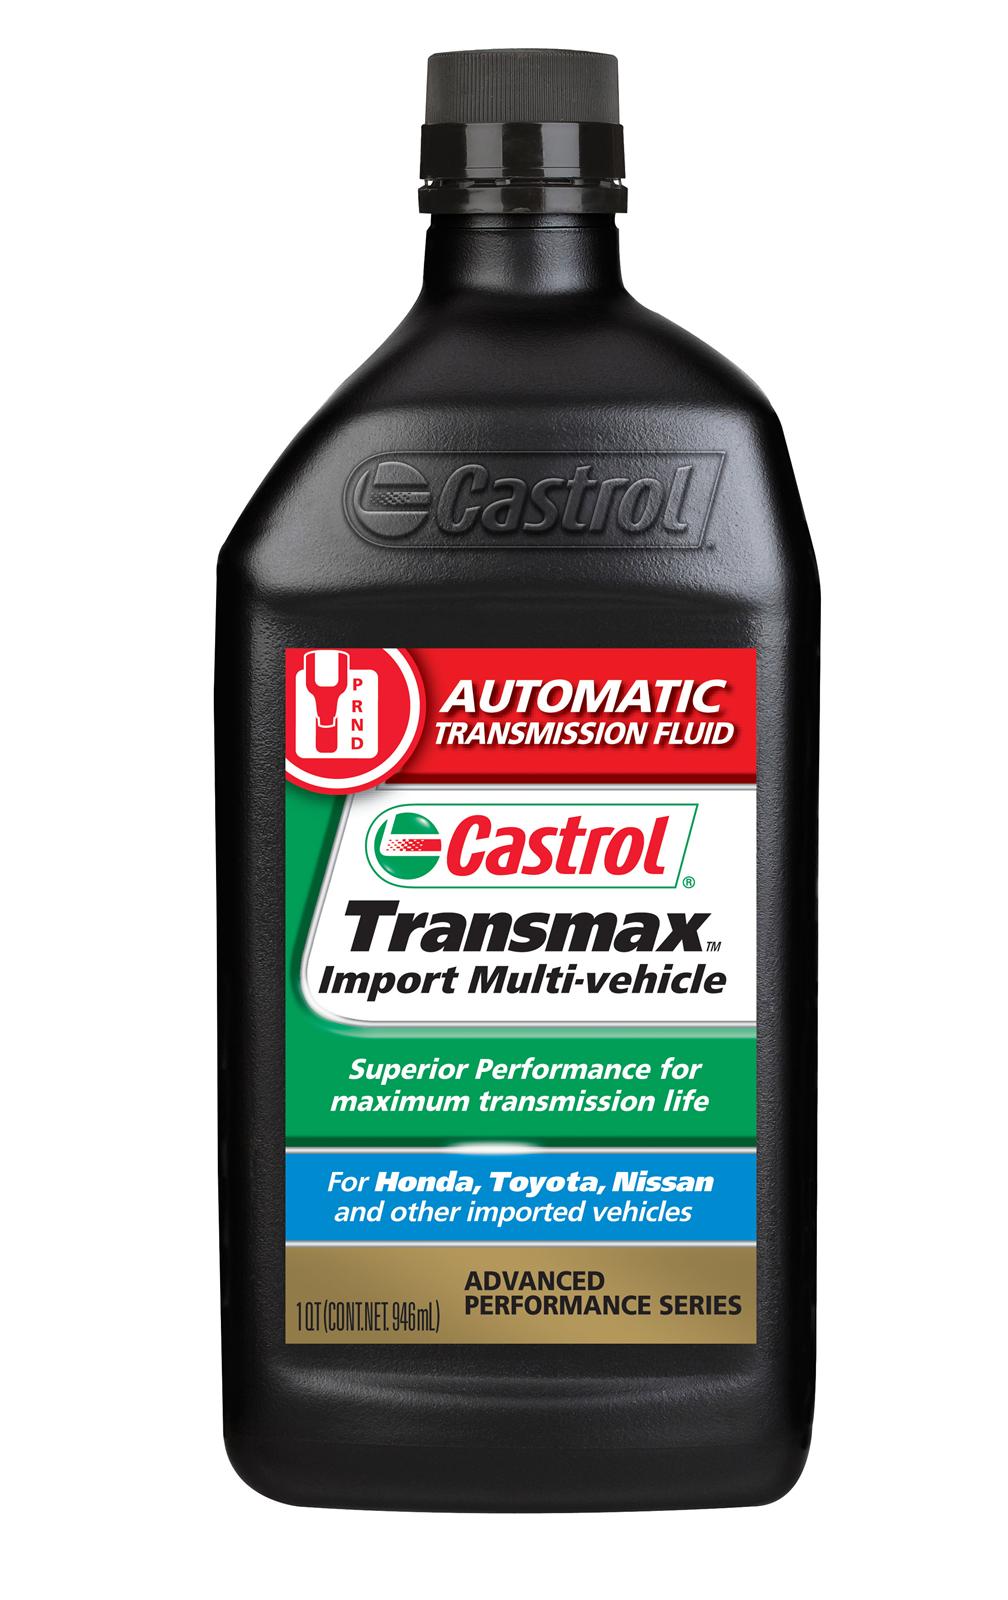 Castrol Transmax Import Multi-Vehicle Automatic Transmission Fluid